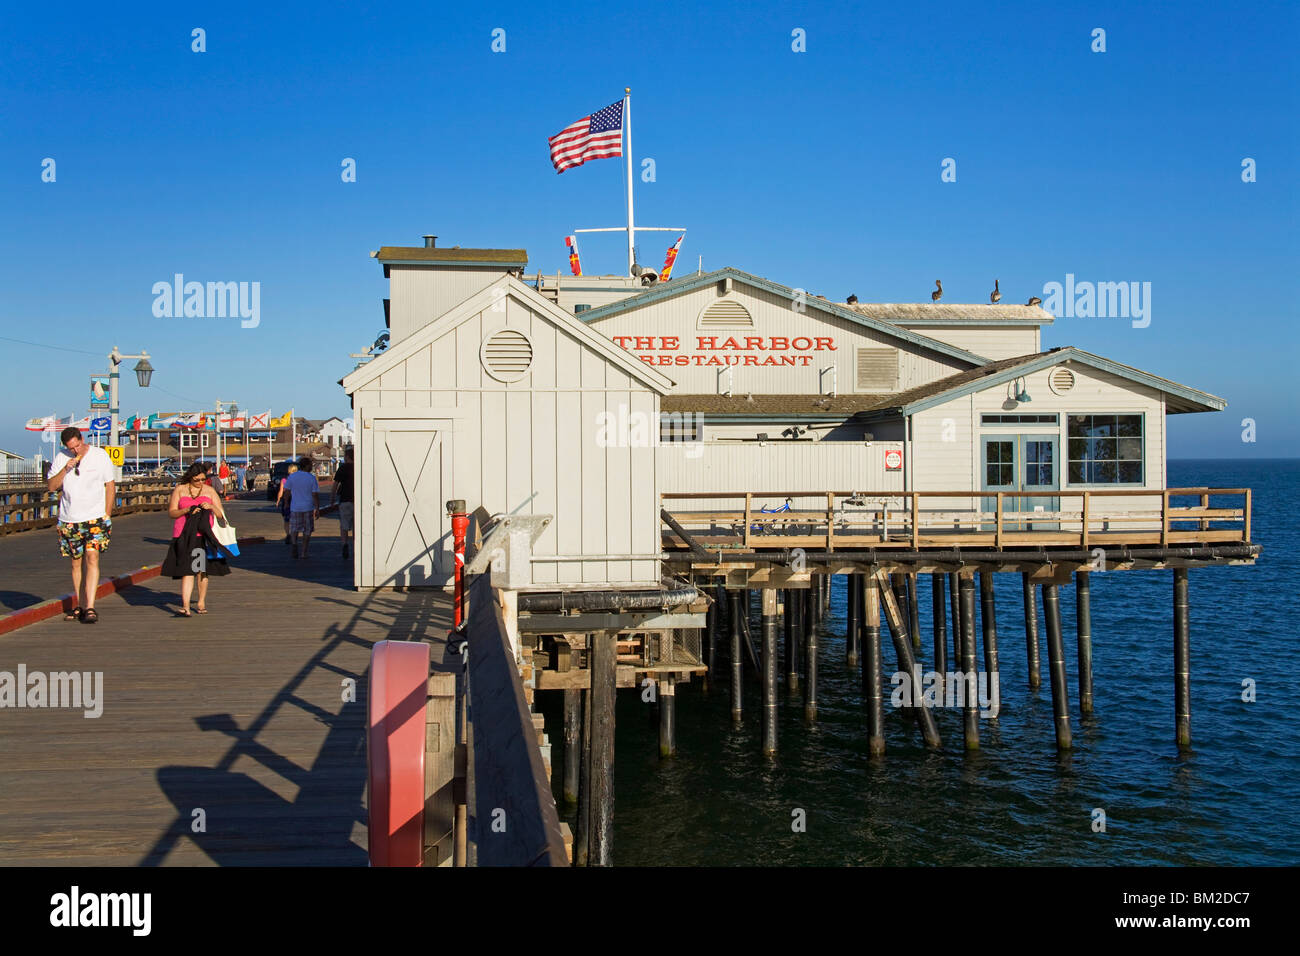 Seafood Restaurant on Stearns Wharf, Santa Barbara Harbor, California, USA Stock Photo